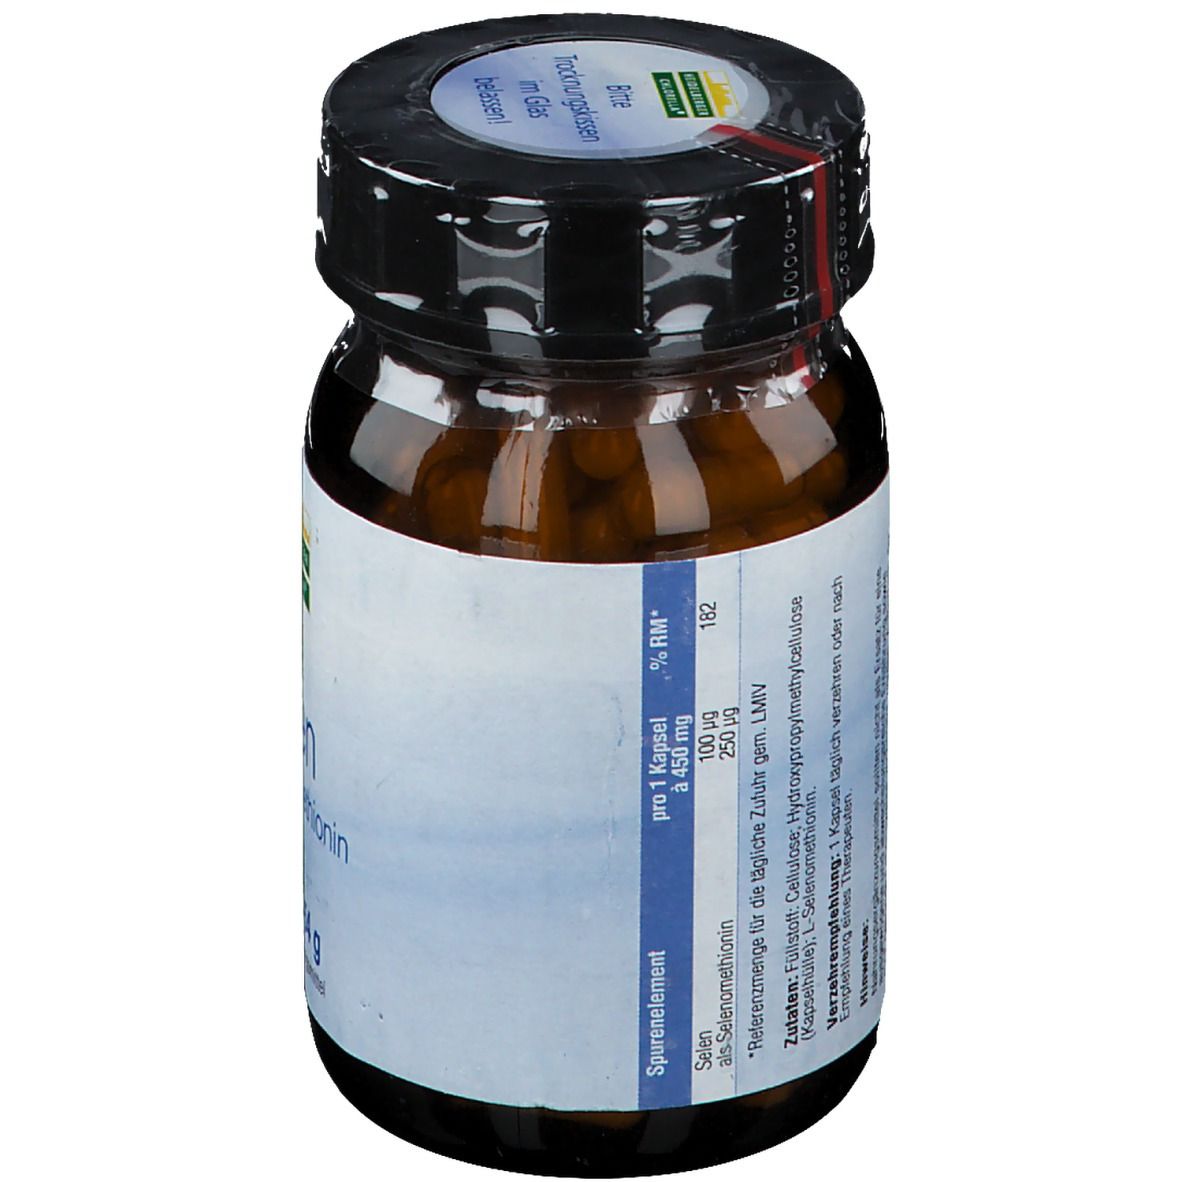 Heidelberger Chlorella® Selen als Selenomethionin Kapseln